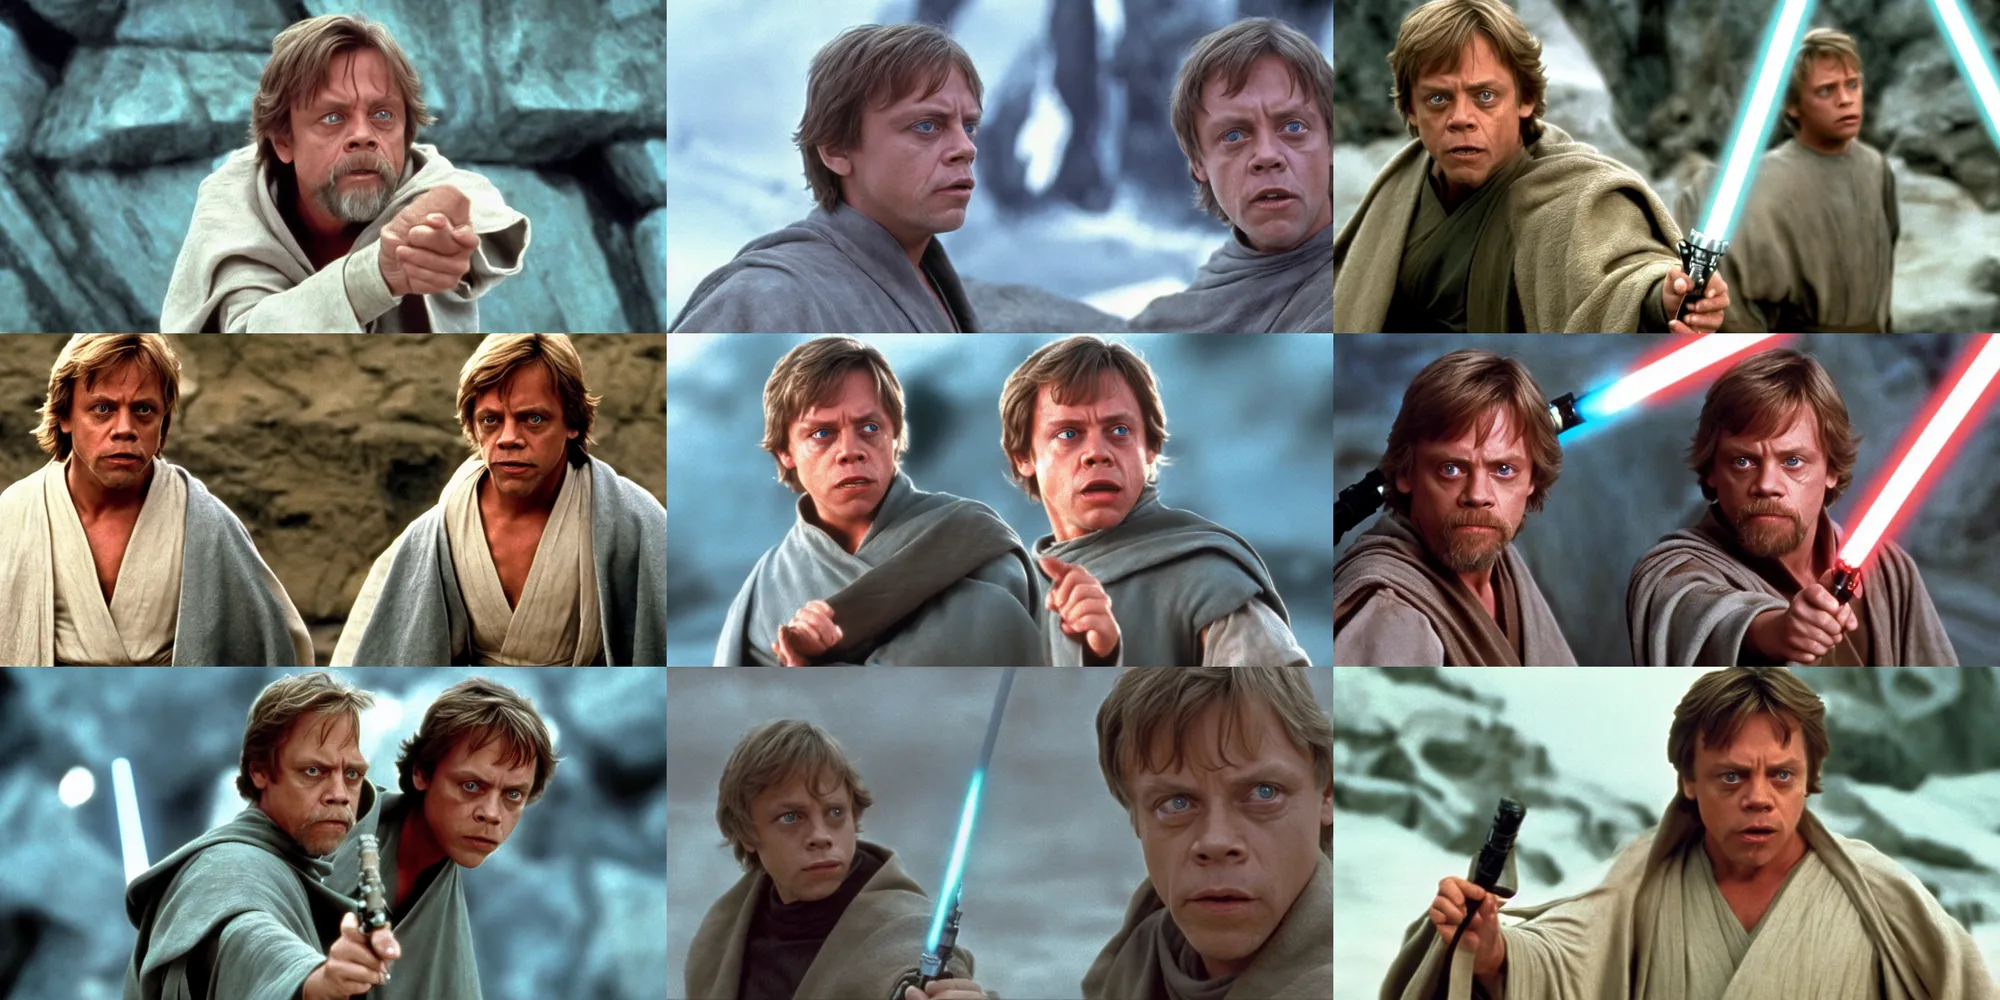 Prompt: A still of Mark Hamill as Jedi Master Luke Skywalker from Star Wars, 1990, Directed by Steven Spielberg, 35mm